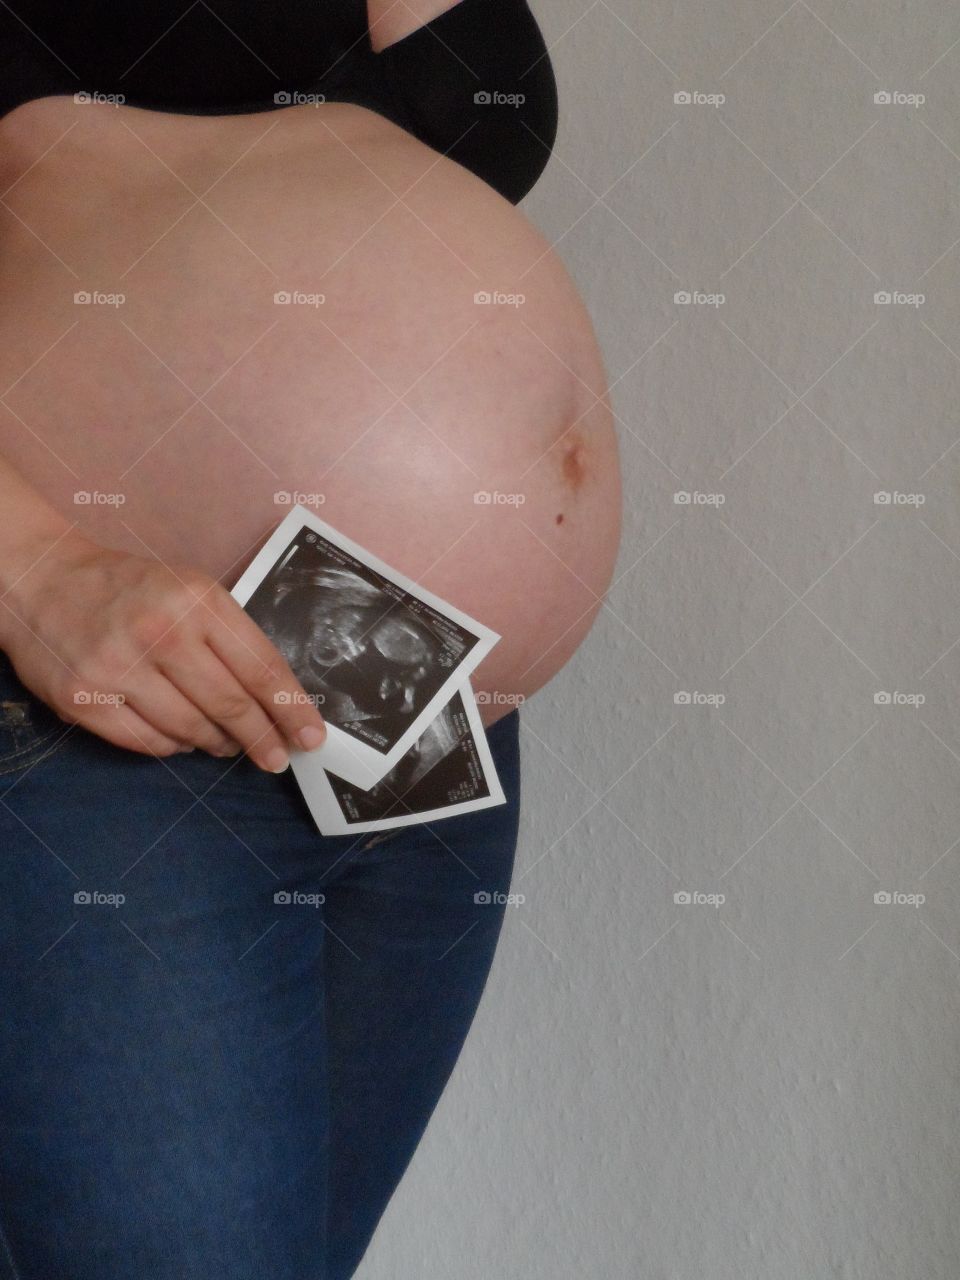 Baby bump. my baby bump with ultrasound photos